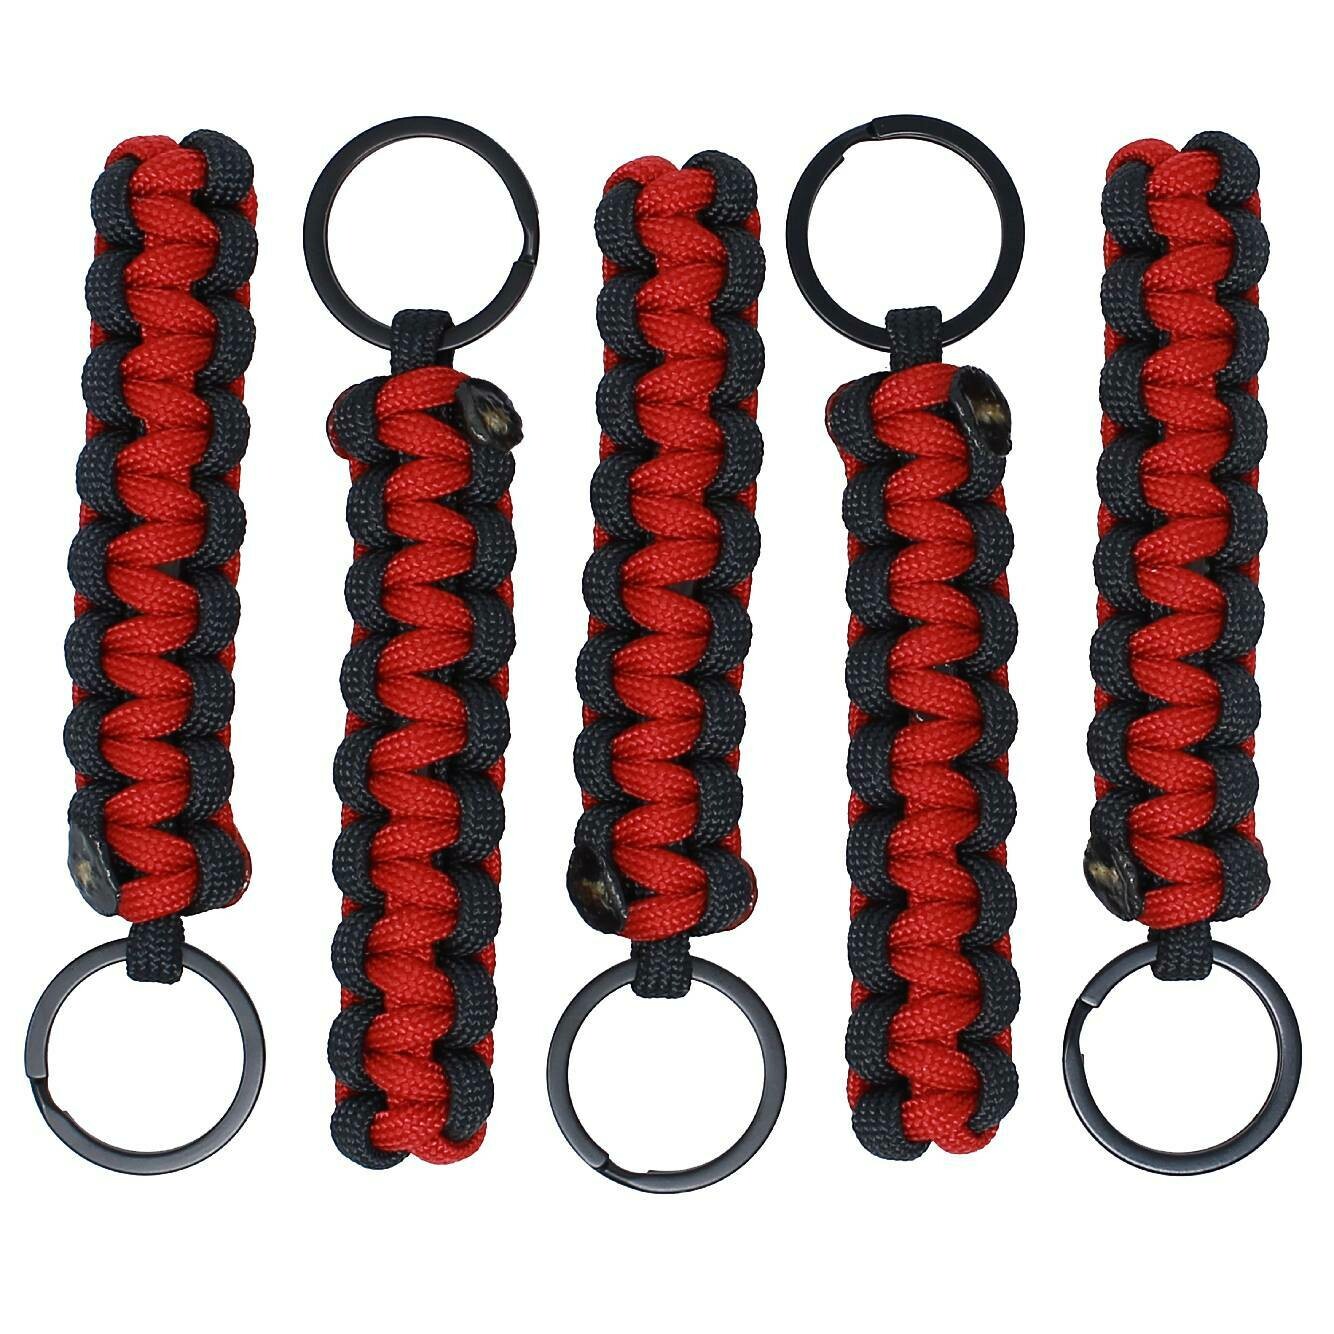 BubbasGarageTv - Paracord Key Chains - 5 Pack (Red)